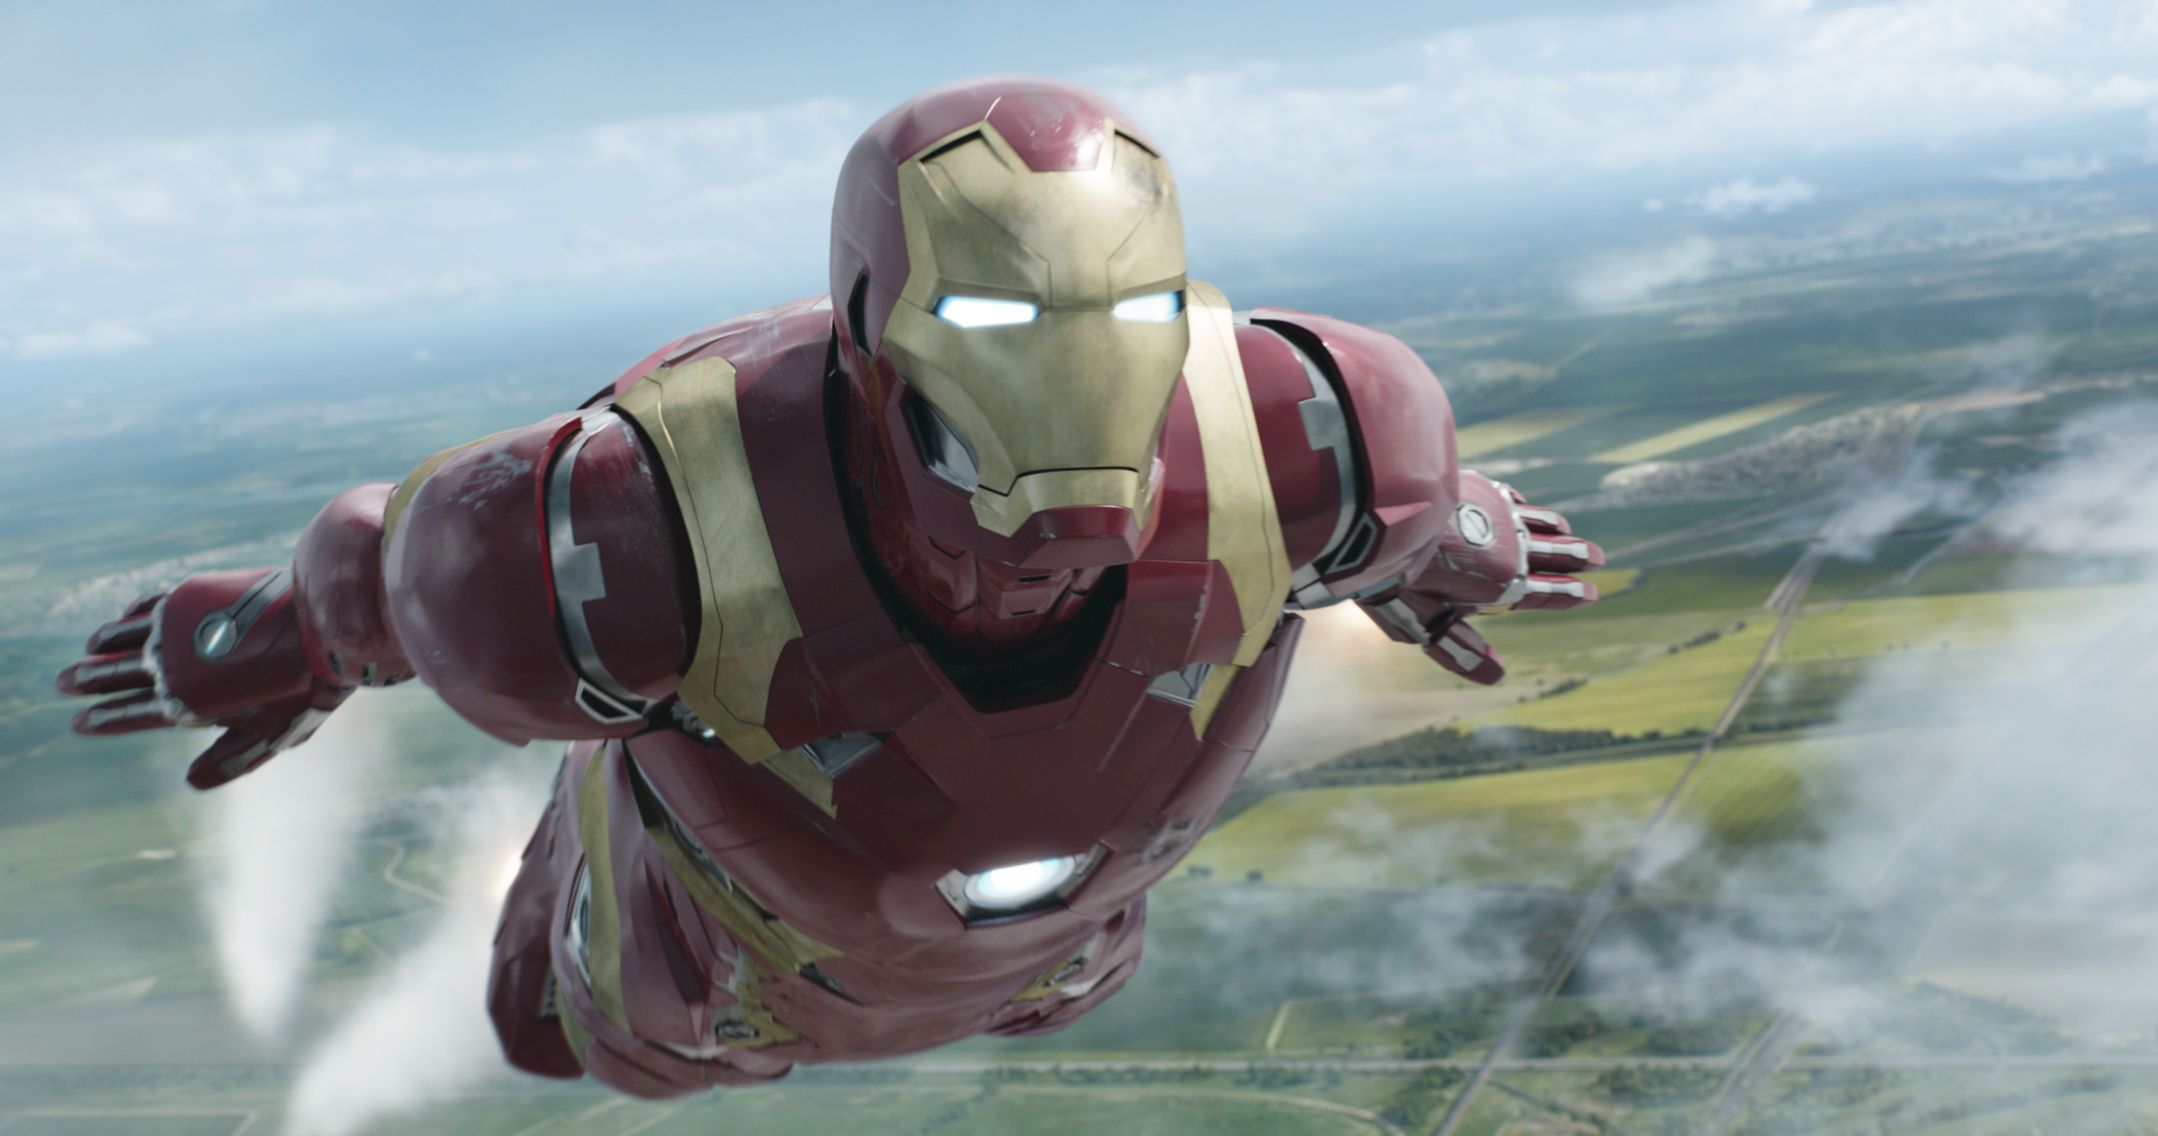 Captain America: Civil War Trailer 2 - Iron Man Flight